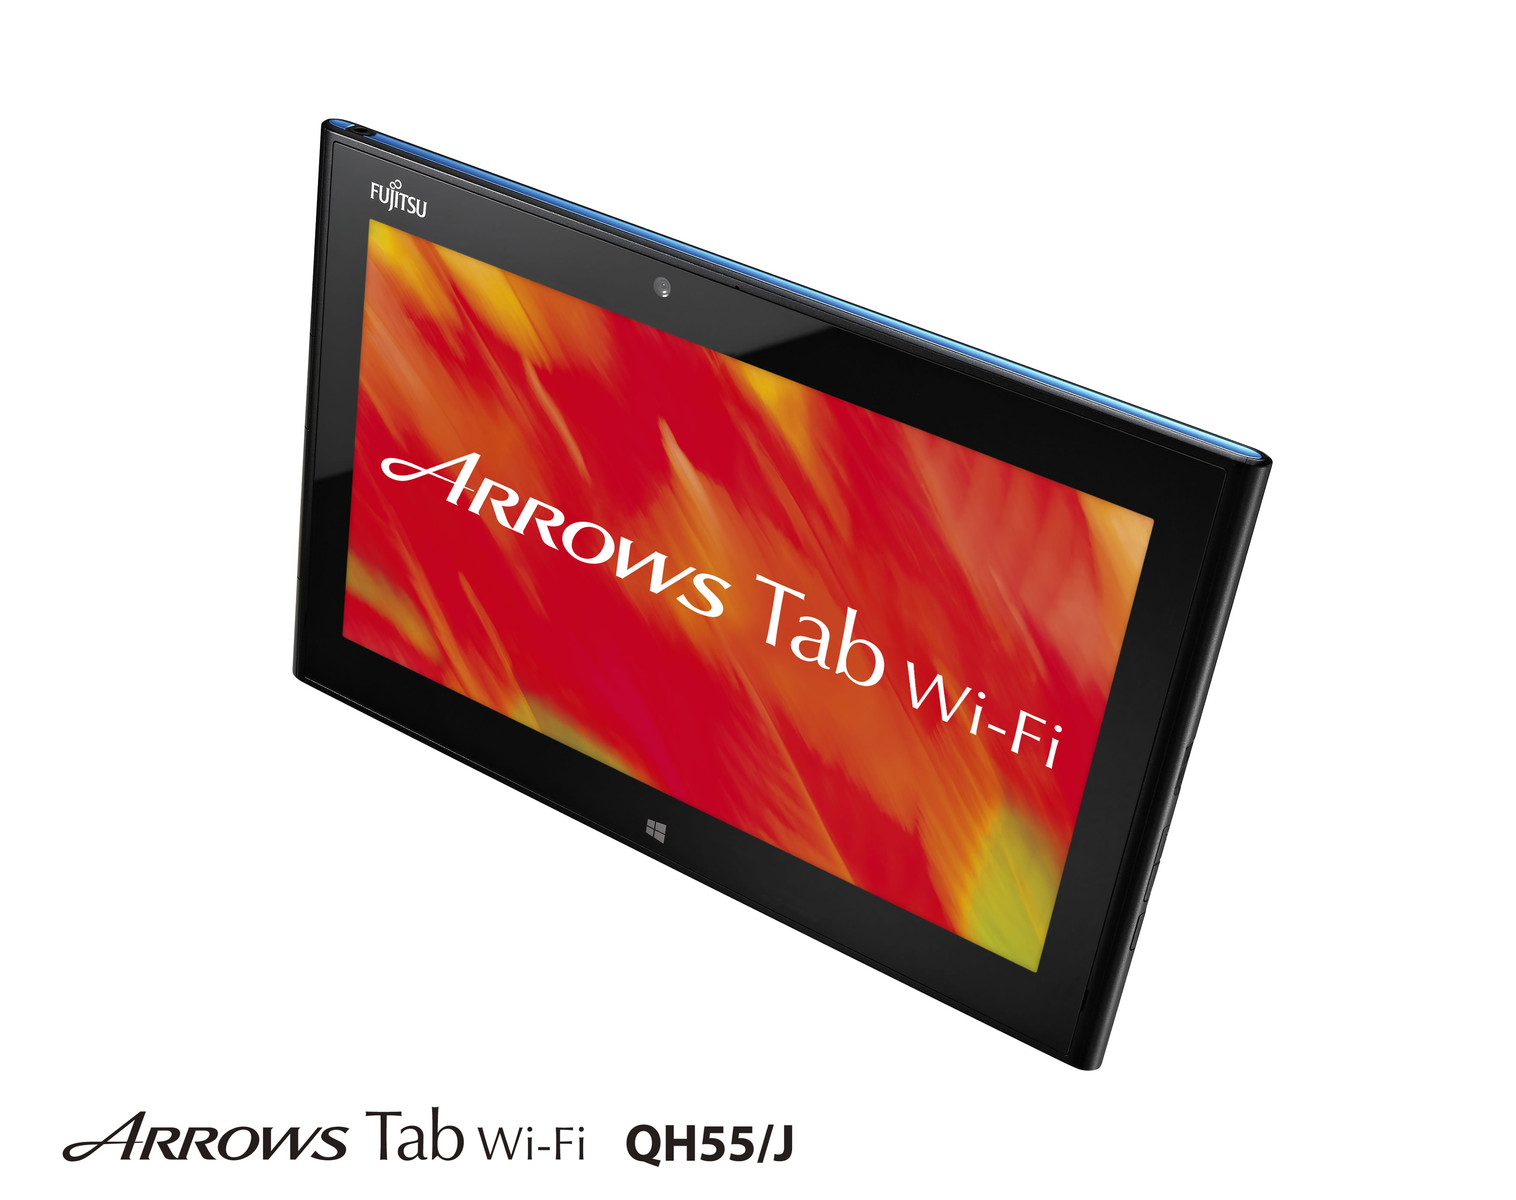 Fujitsu intros the Arrows Tab Wi-Fi FAR70B Android 4.0 and QH55/J